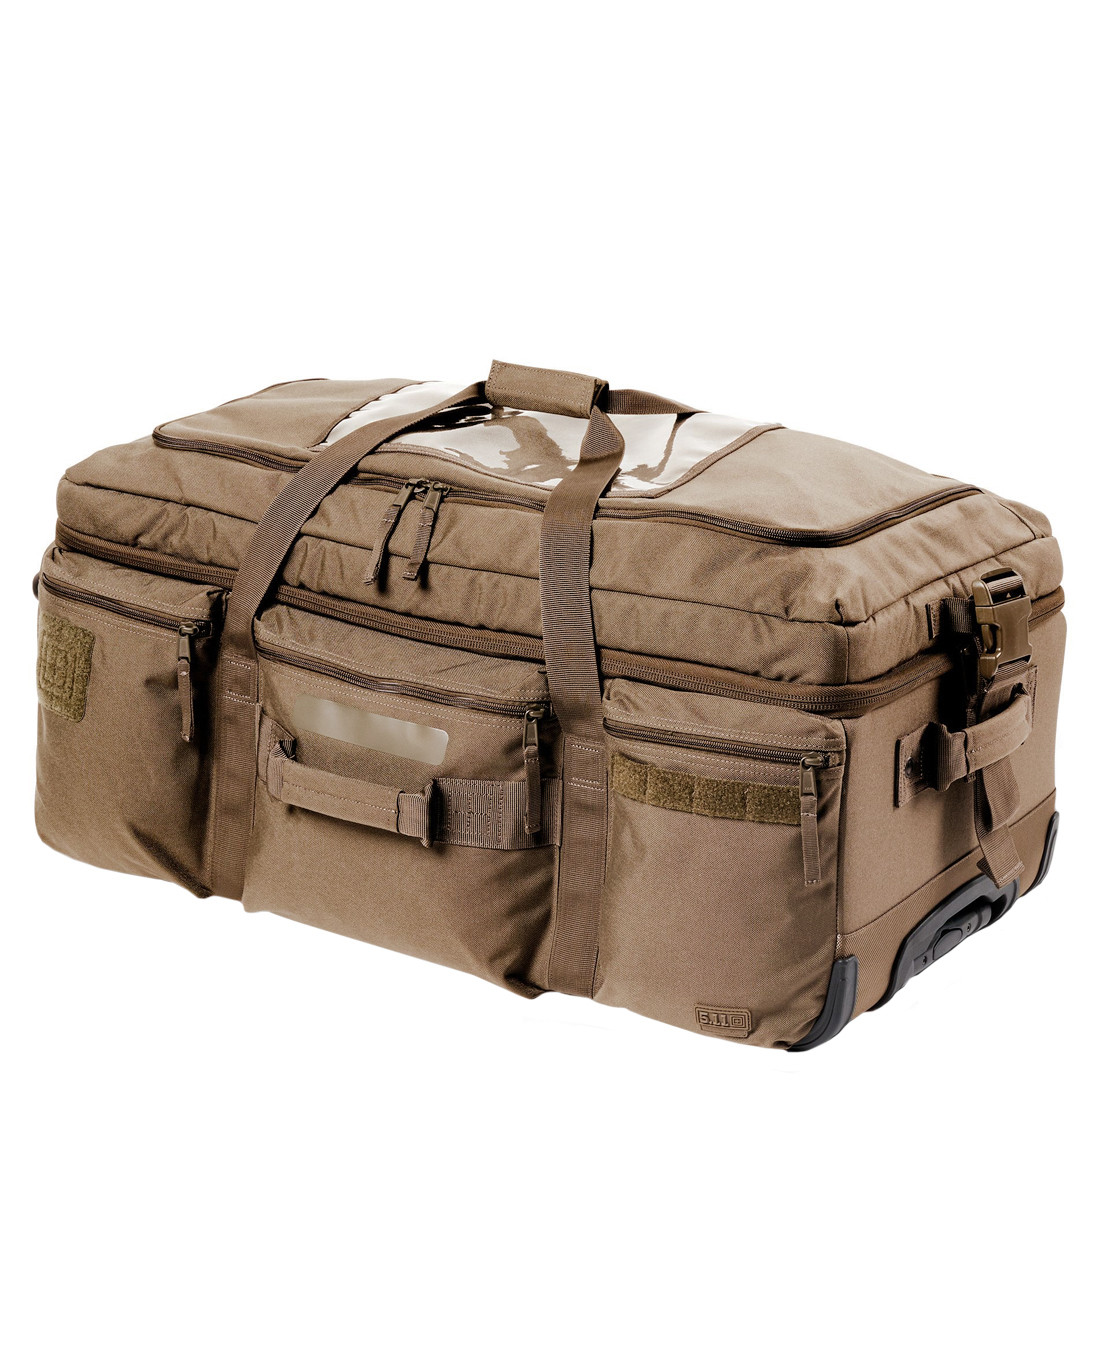 511 tactical bags